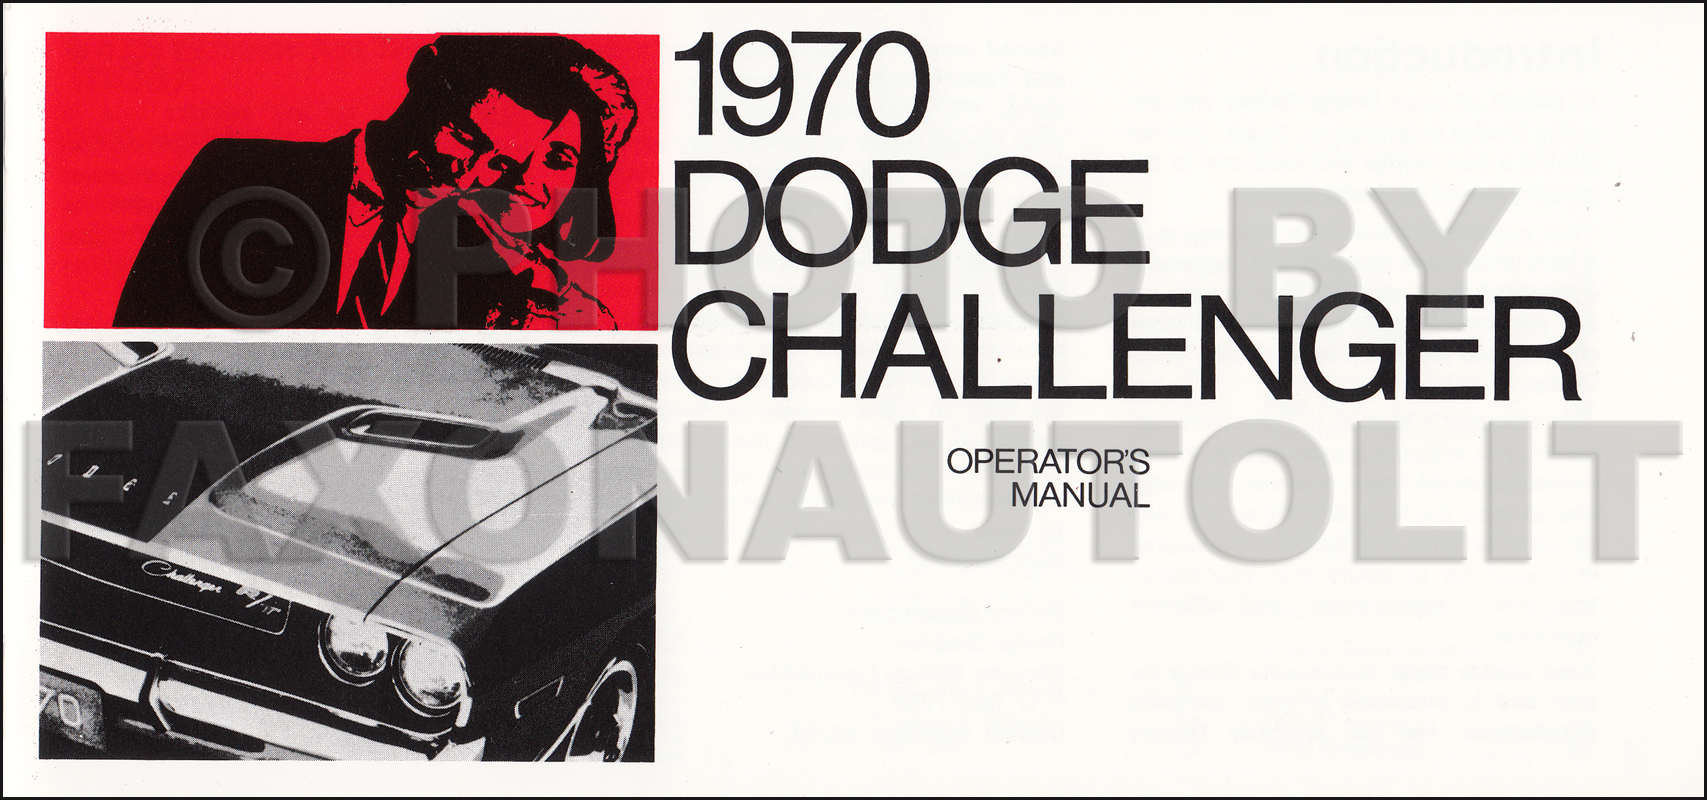 1970 Dodge Challenger Owner's Manual Reprint